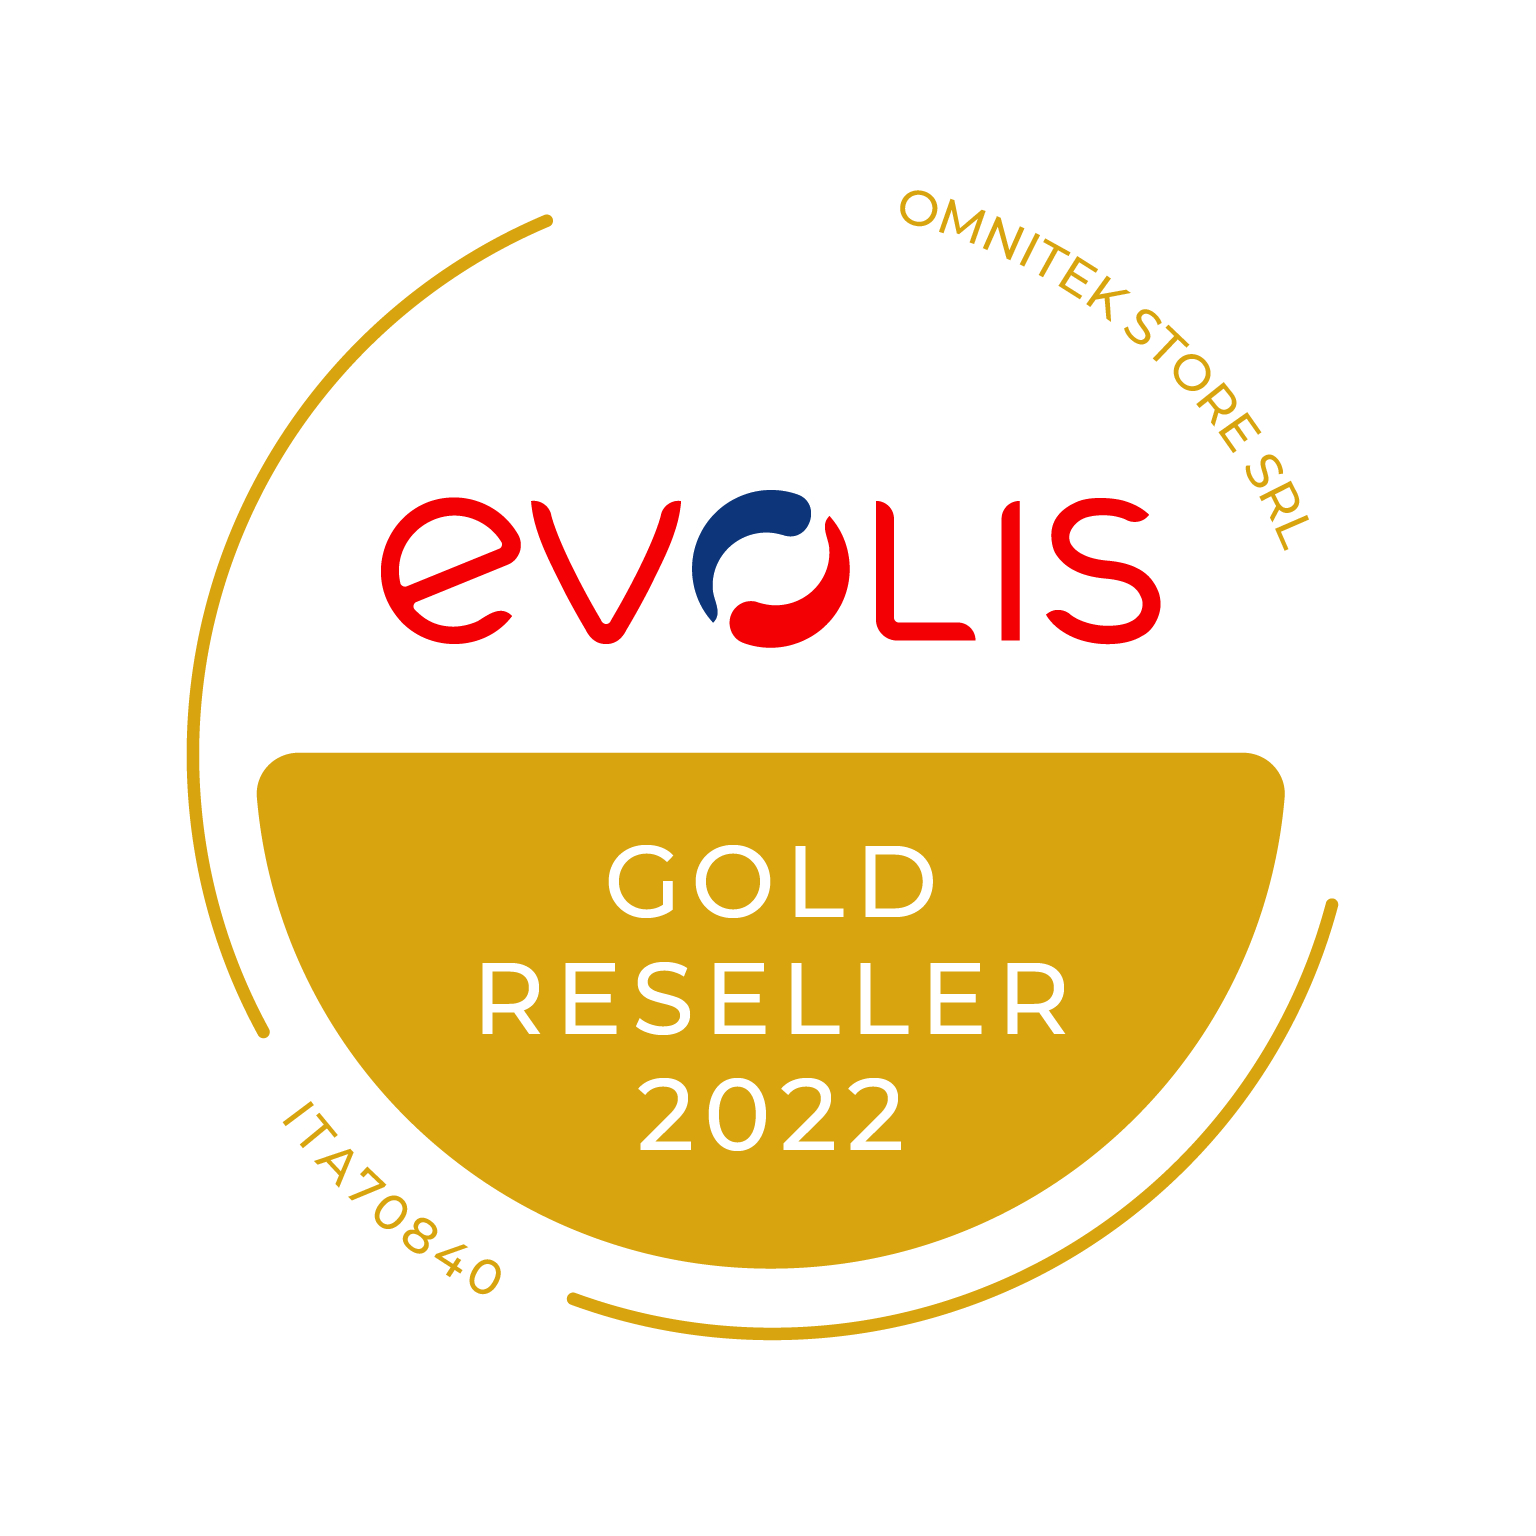 CK - evolis gold reseller